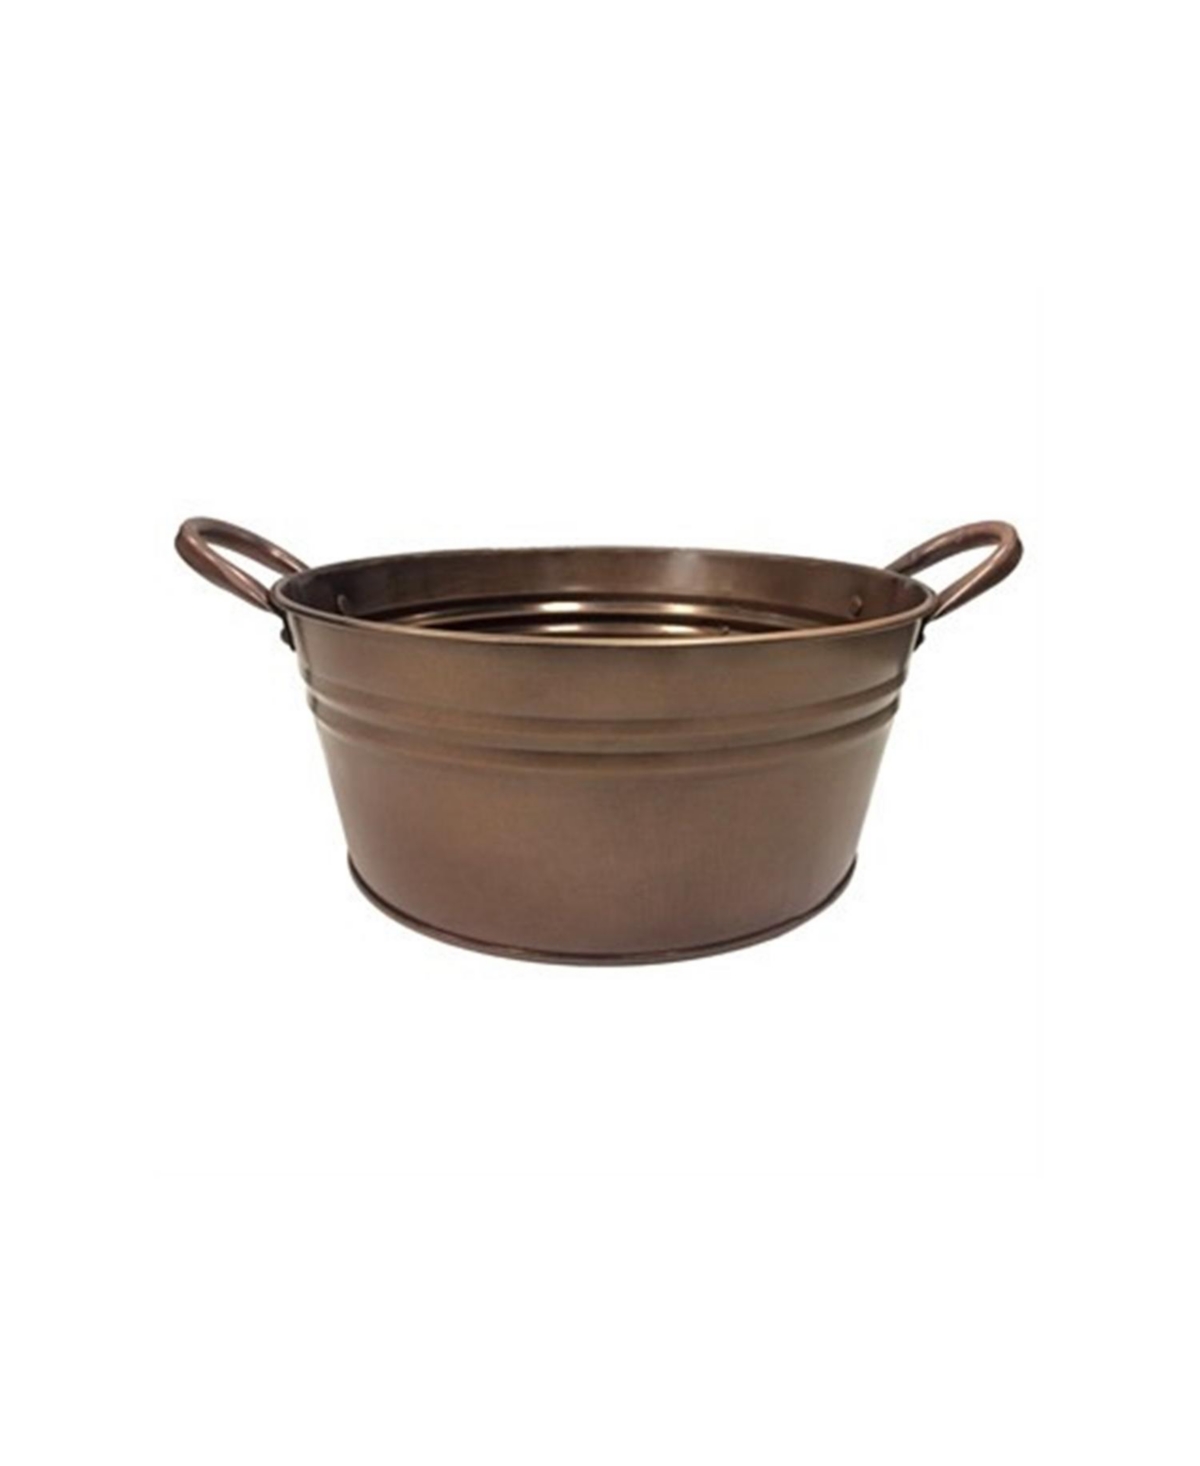 Tin Bucket, Antique Copper, 9 inches - Antique copper